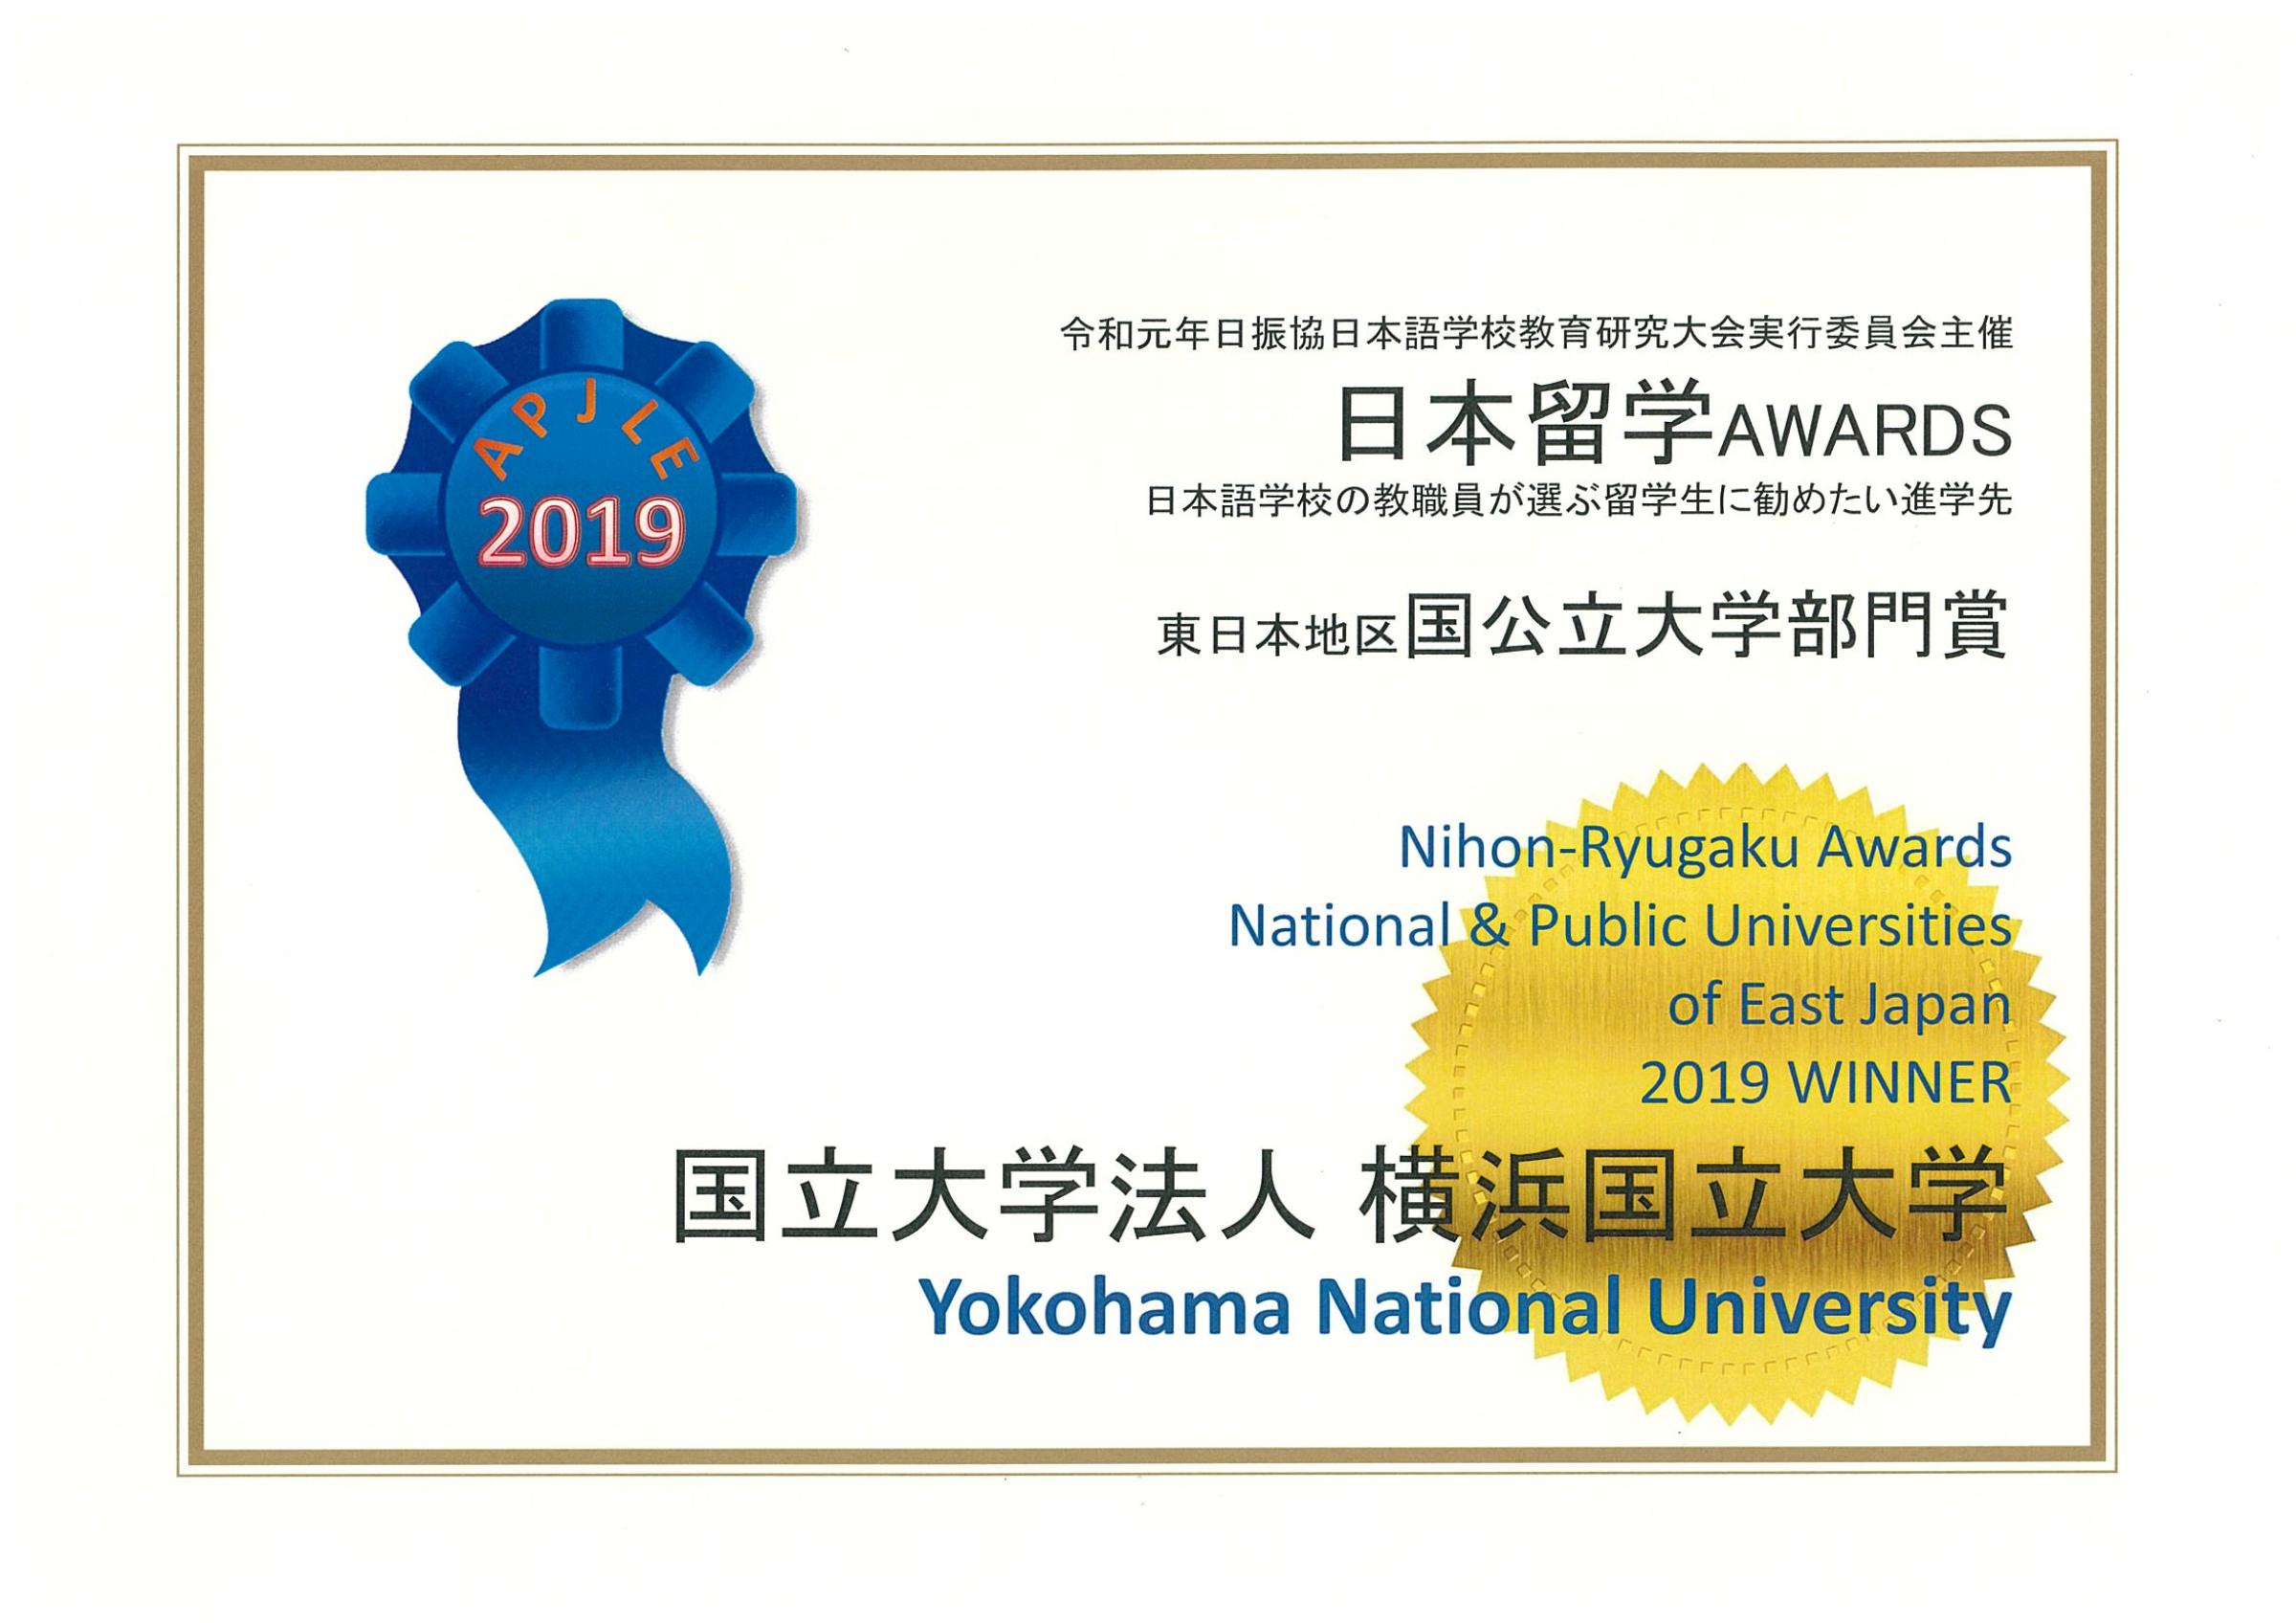 Certificate of the Ryugaku Awards